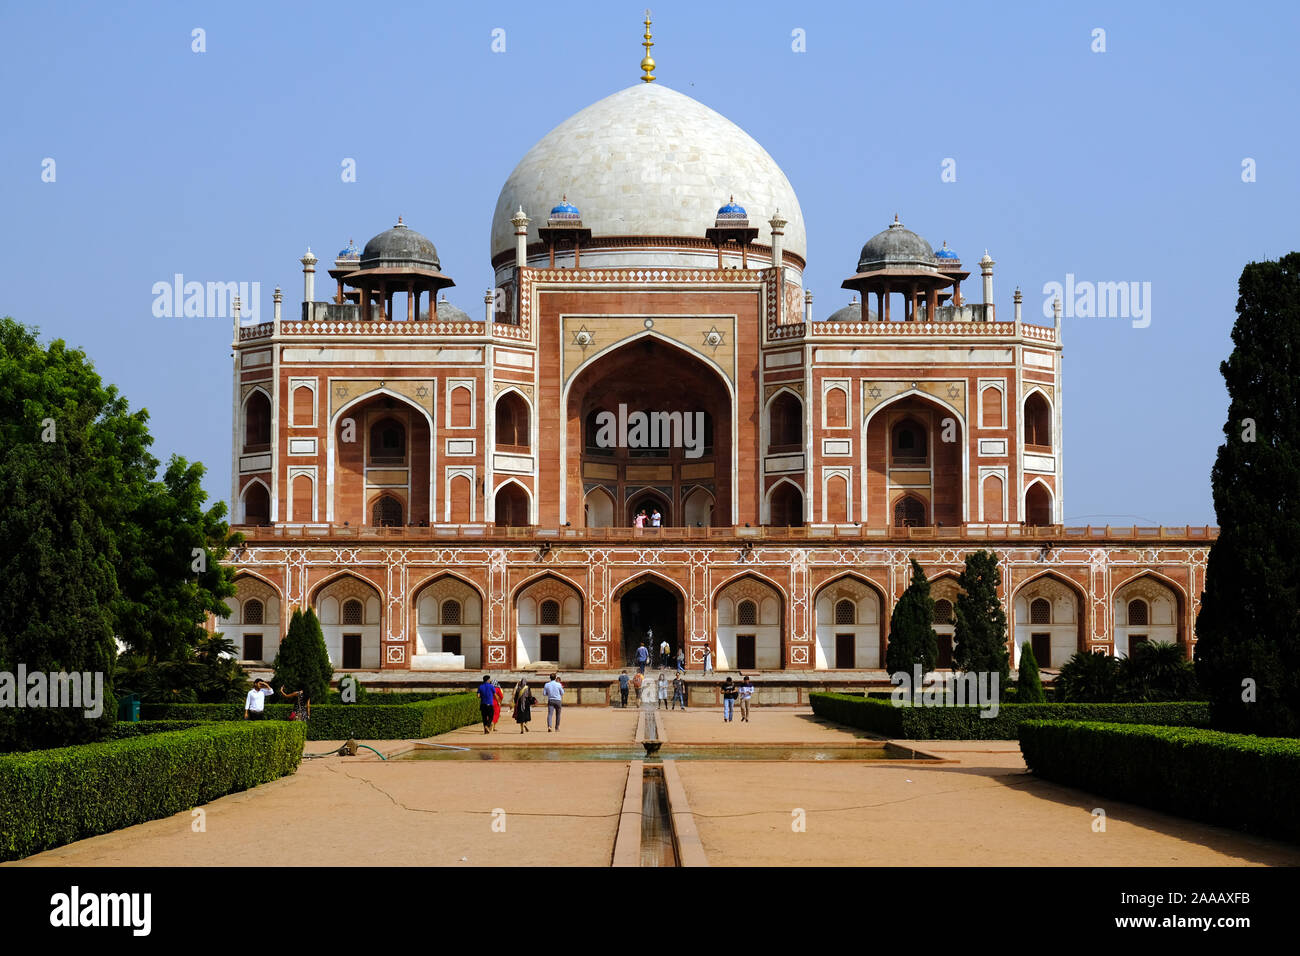 Historical landmark - Islamic architecture in India Delhi Humayun Tomb Stock Photo